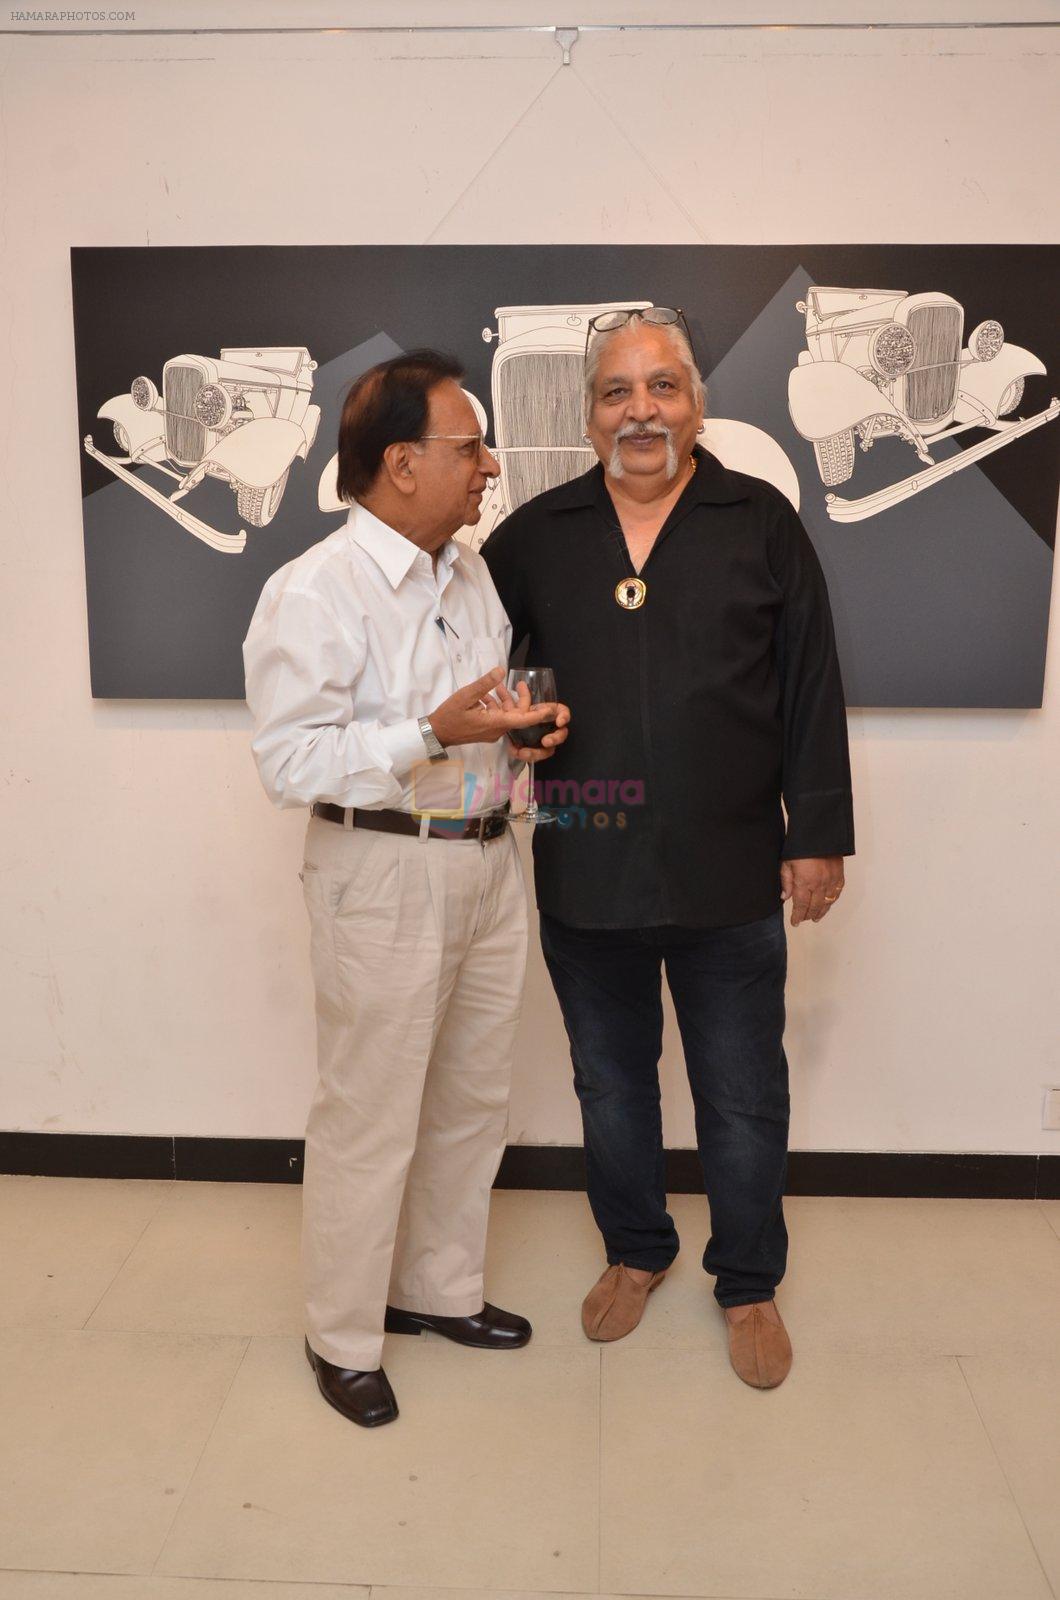 at Pratik Sharma exhibition in Mumbai on 22nd Feb 2016